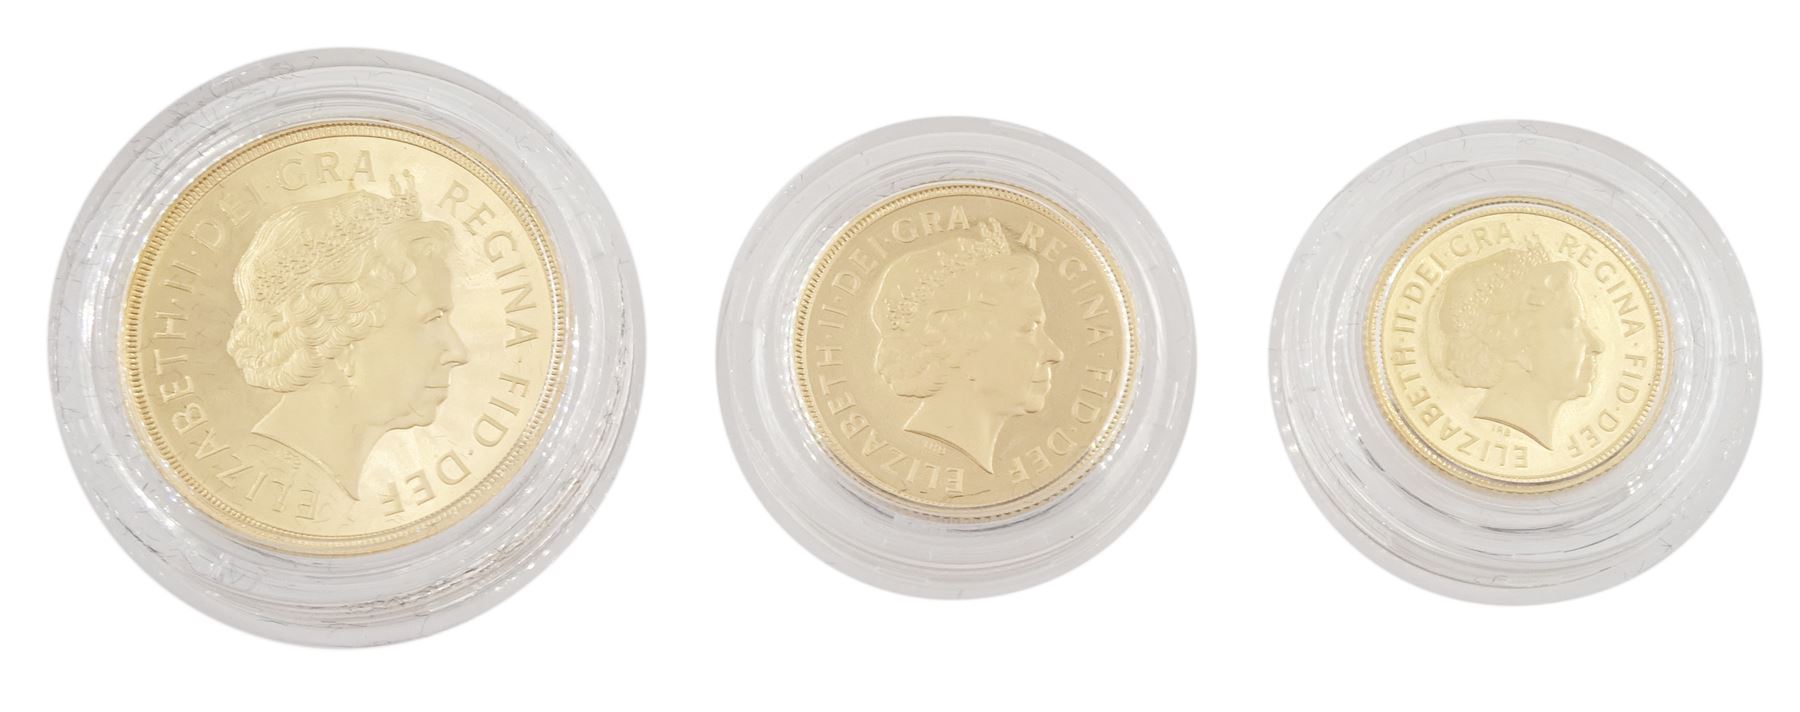 Queen Elizabeth II 'Golden Jubilee' gold proof three-coin shield back sovereign set - Image 2 of 3